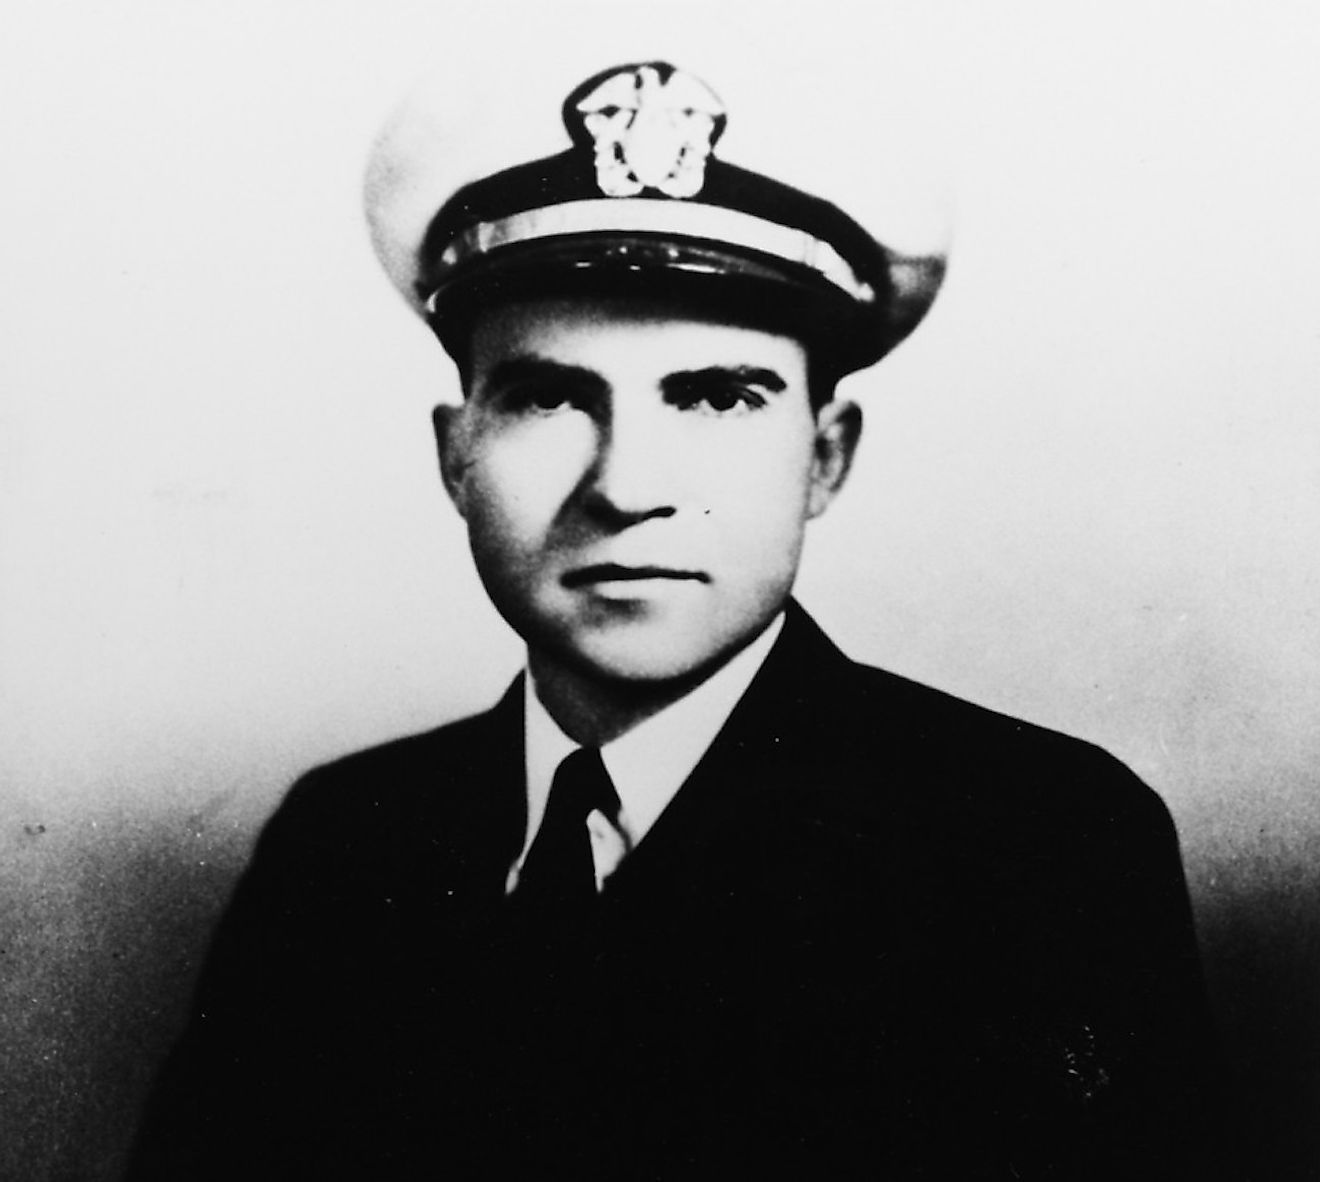 Lieutenant Commander Richard Milhous Nixon. Image credit: Naval History and Heritage Command / Public domain